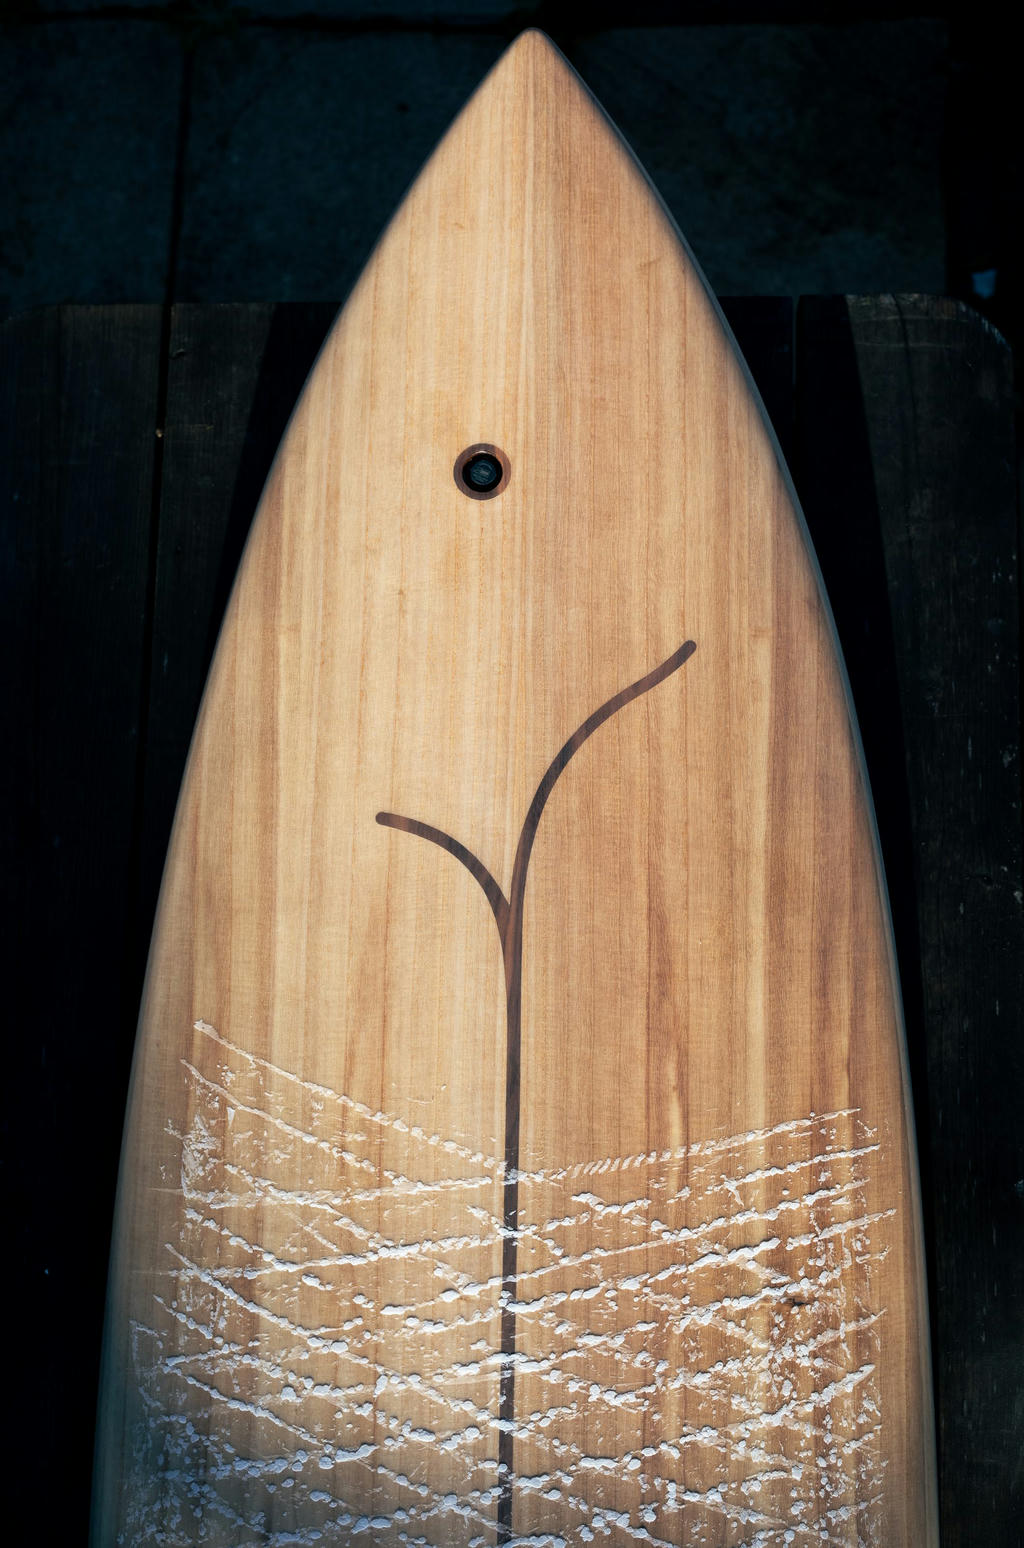 A Bosiny Flagship wooden surfboard freshly waxed